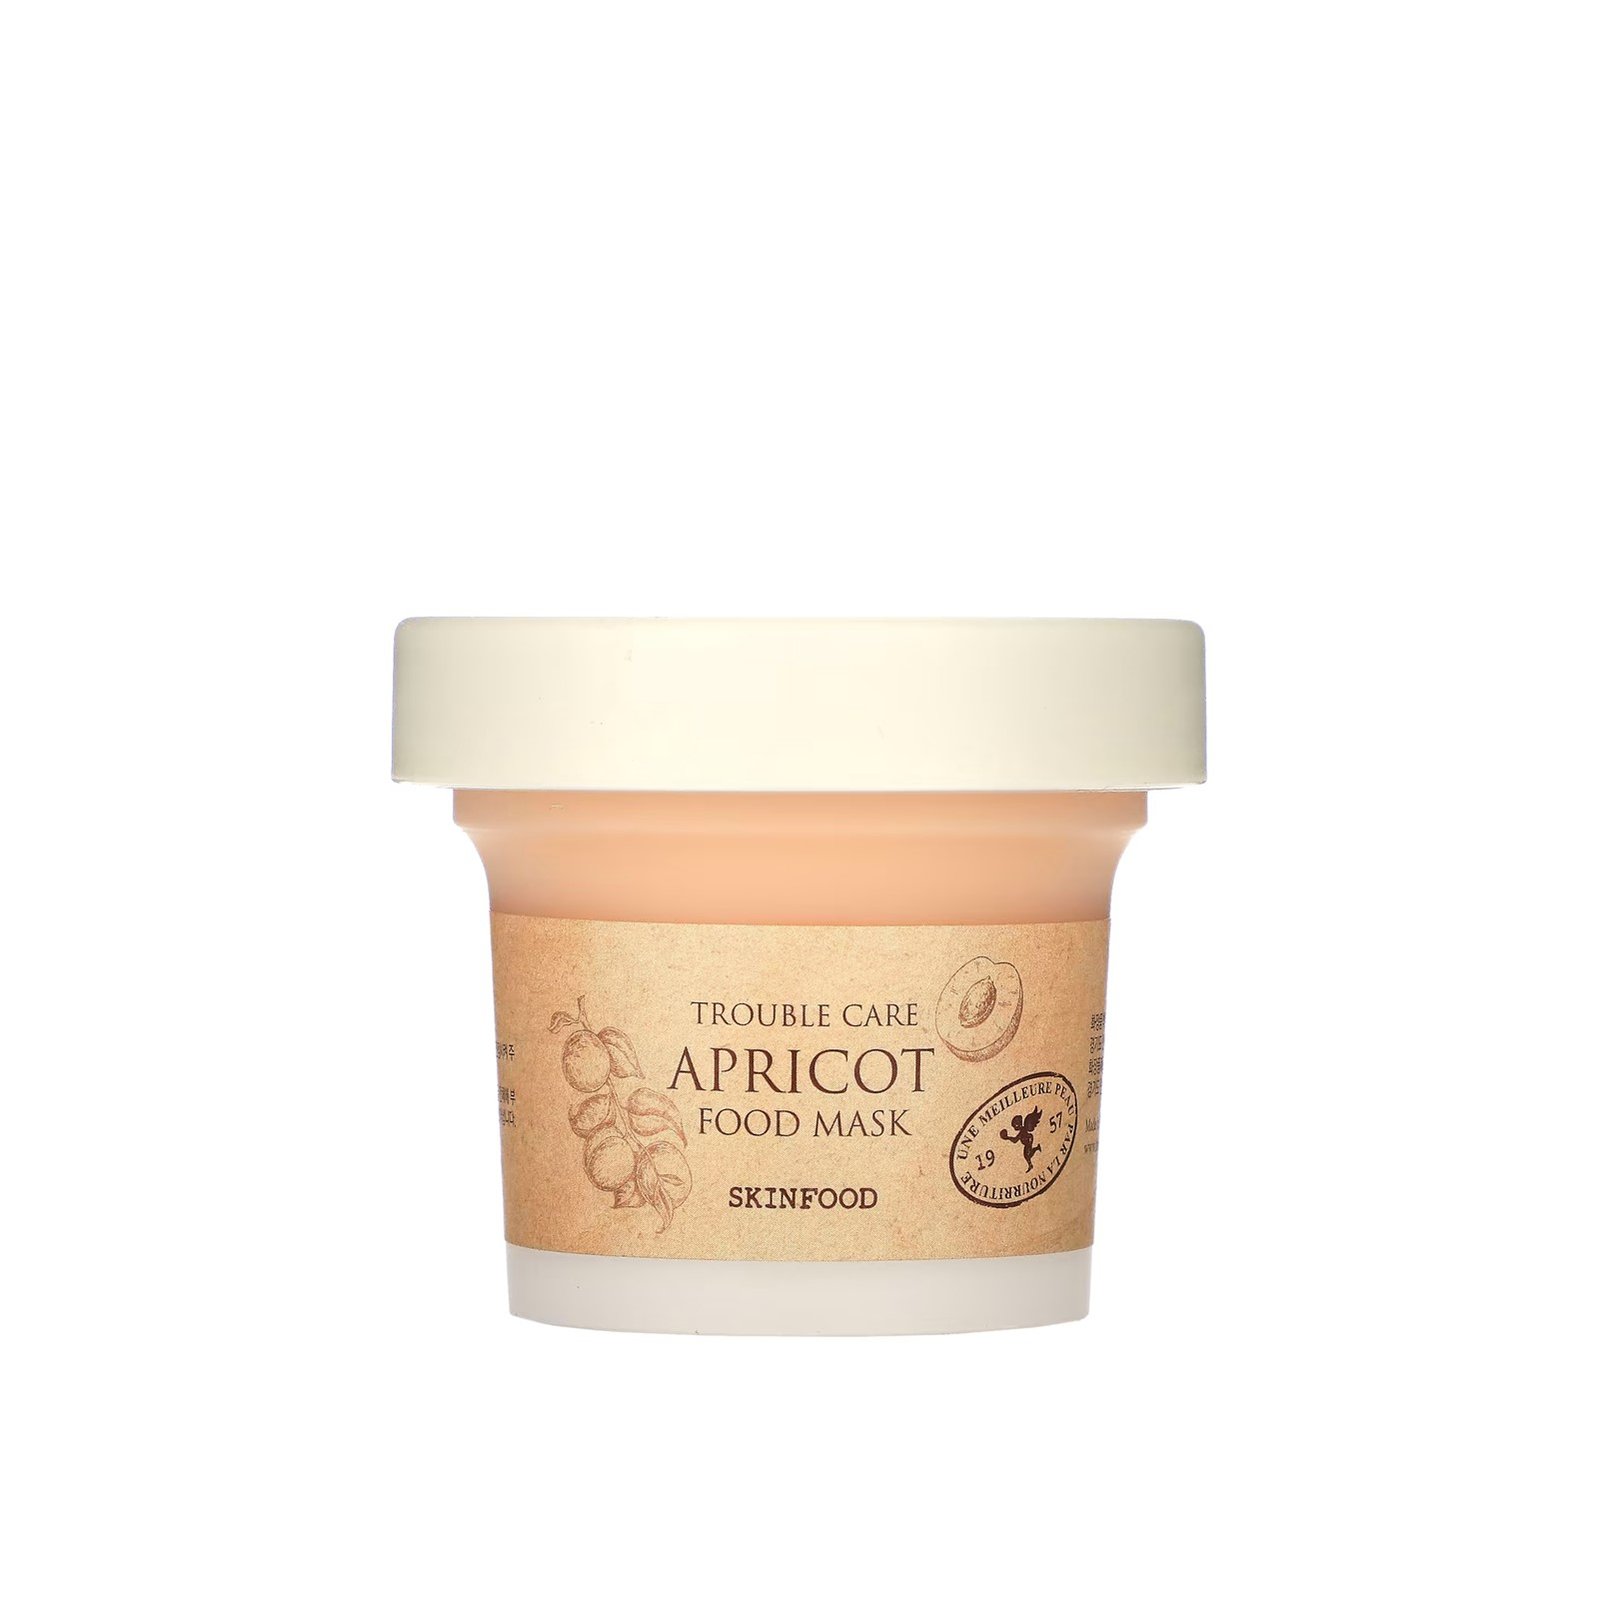 SKINFOOD Apricot Food Mask 120g (4.23 oz)